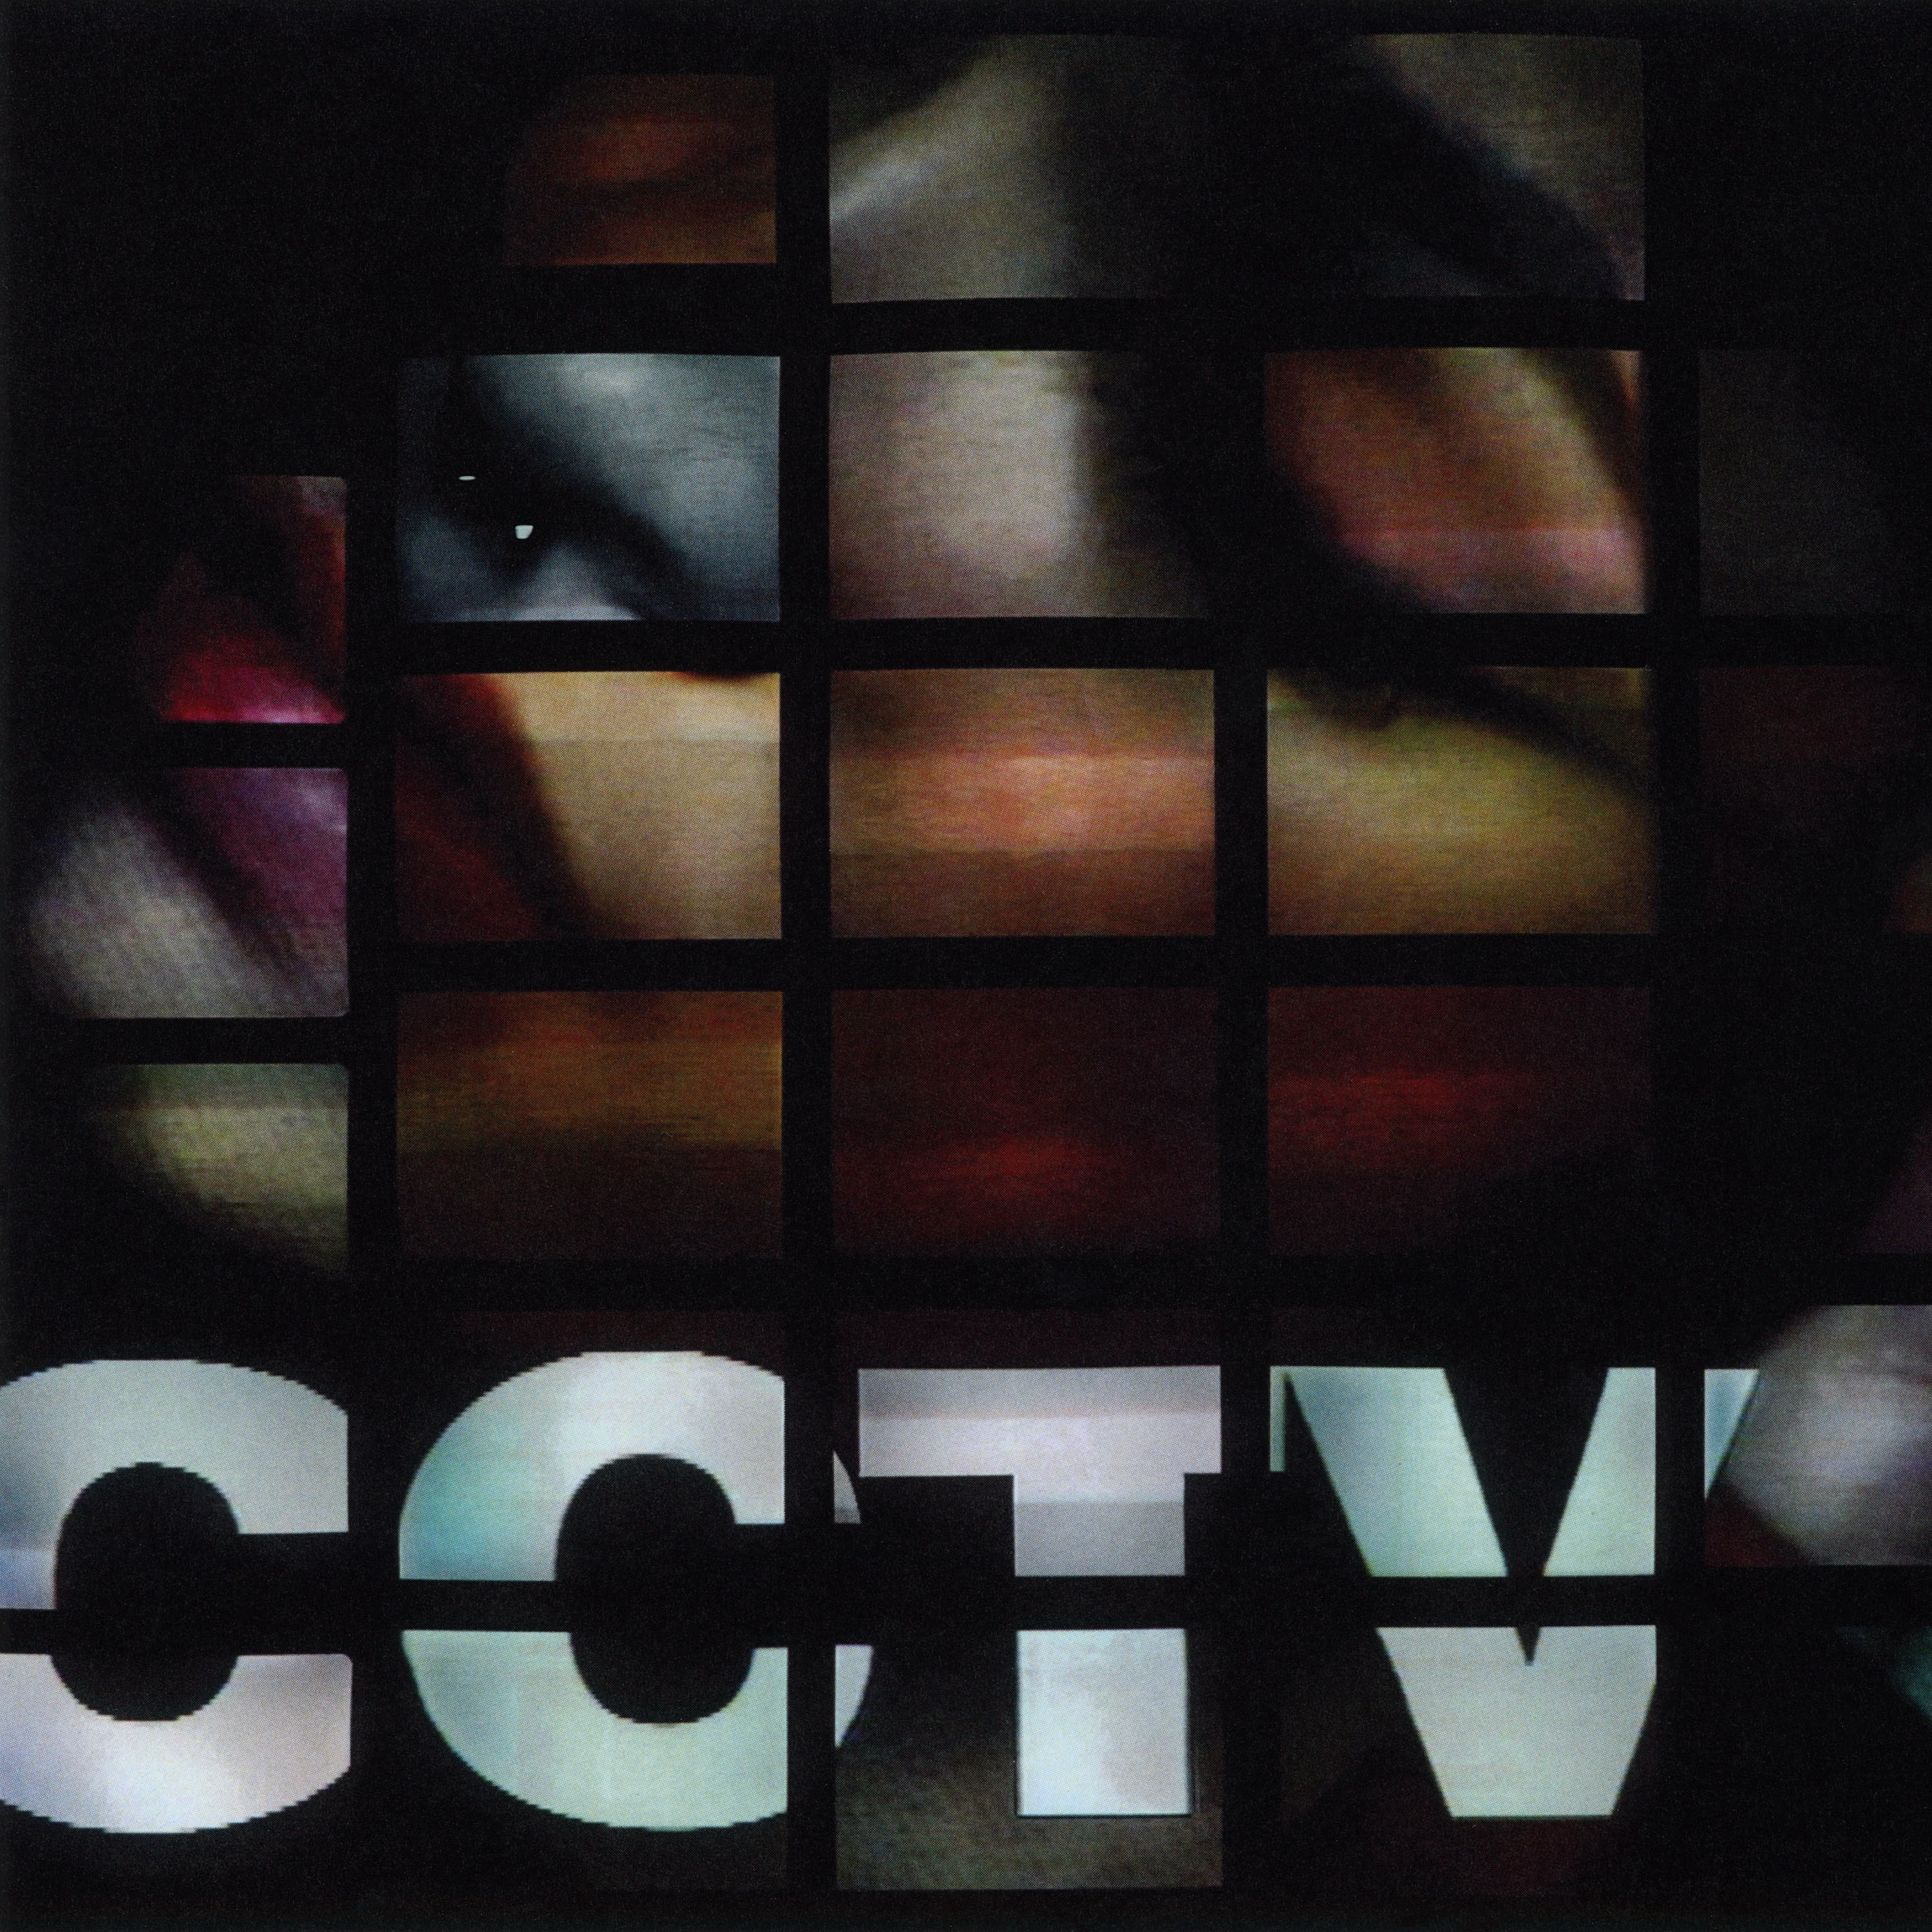 CCTVCOVERFINAL03_REV-EP